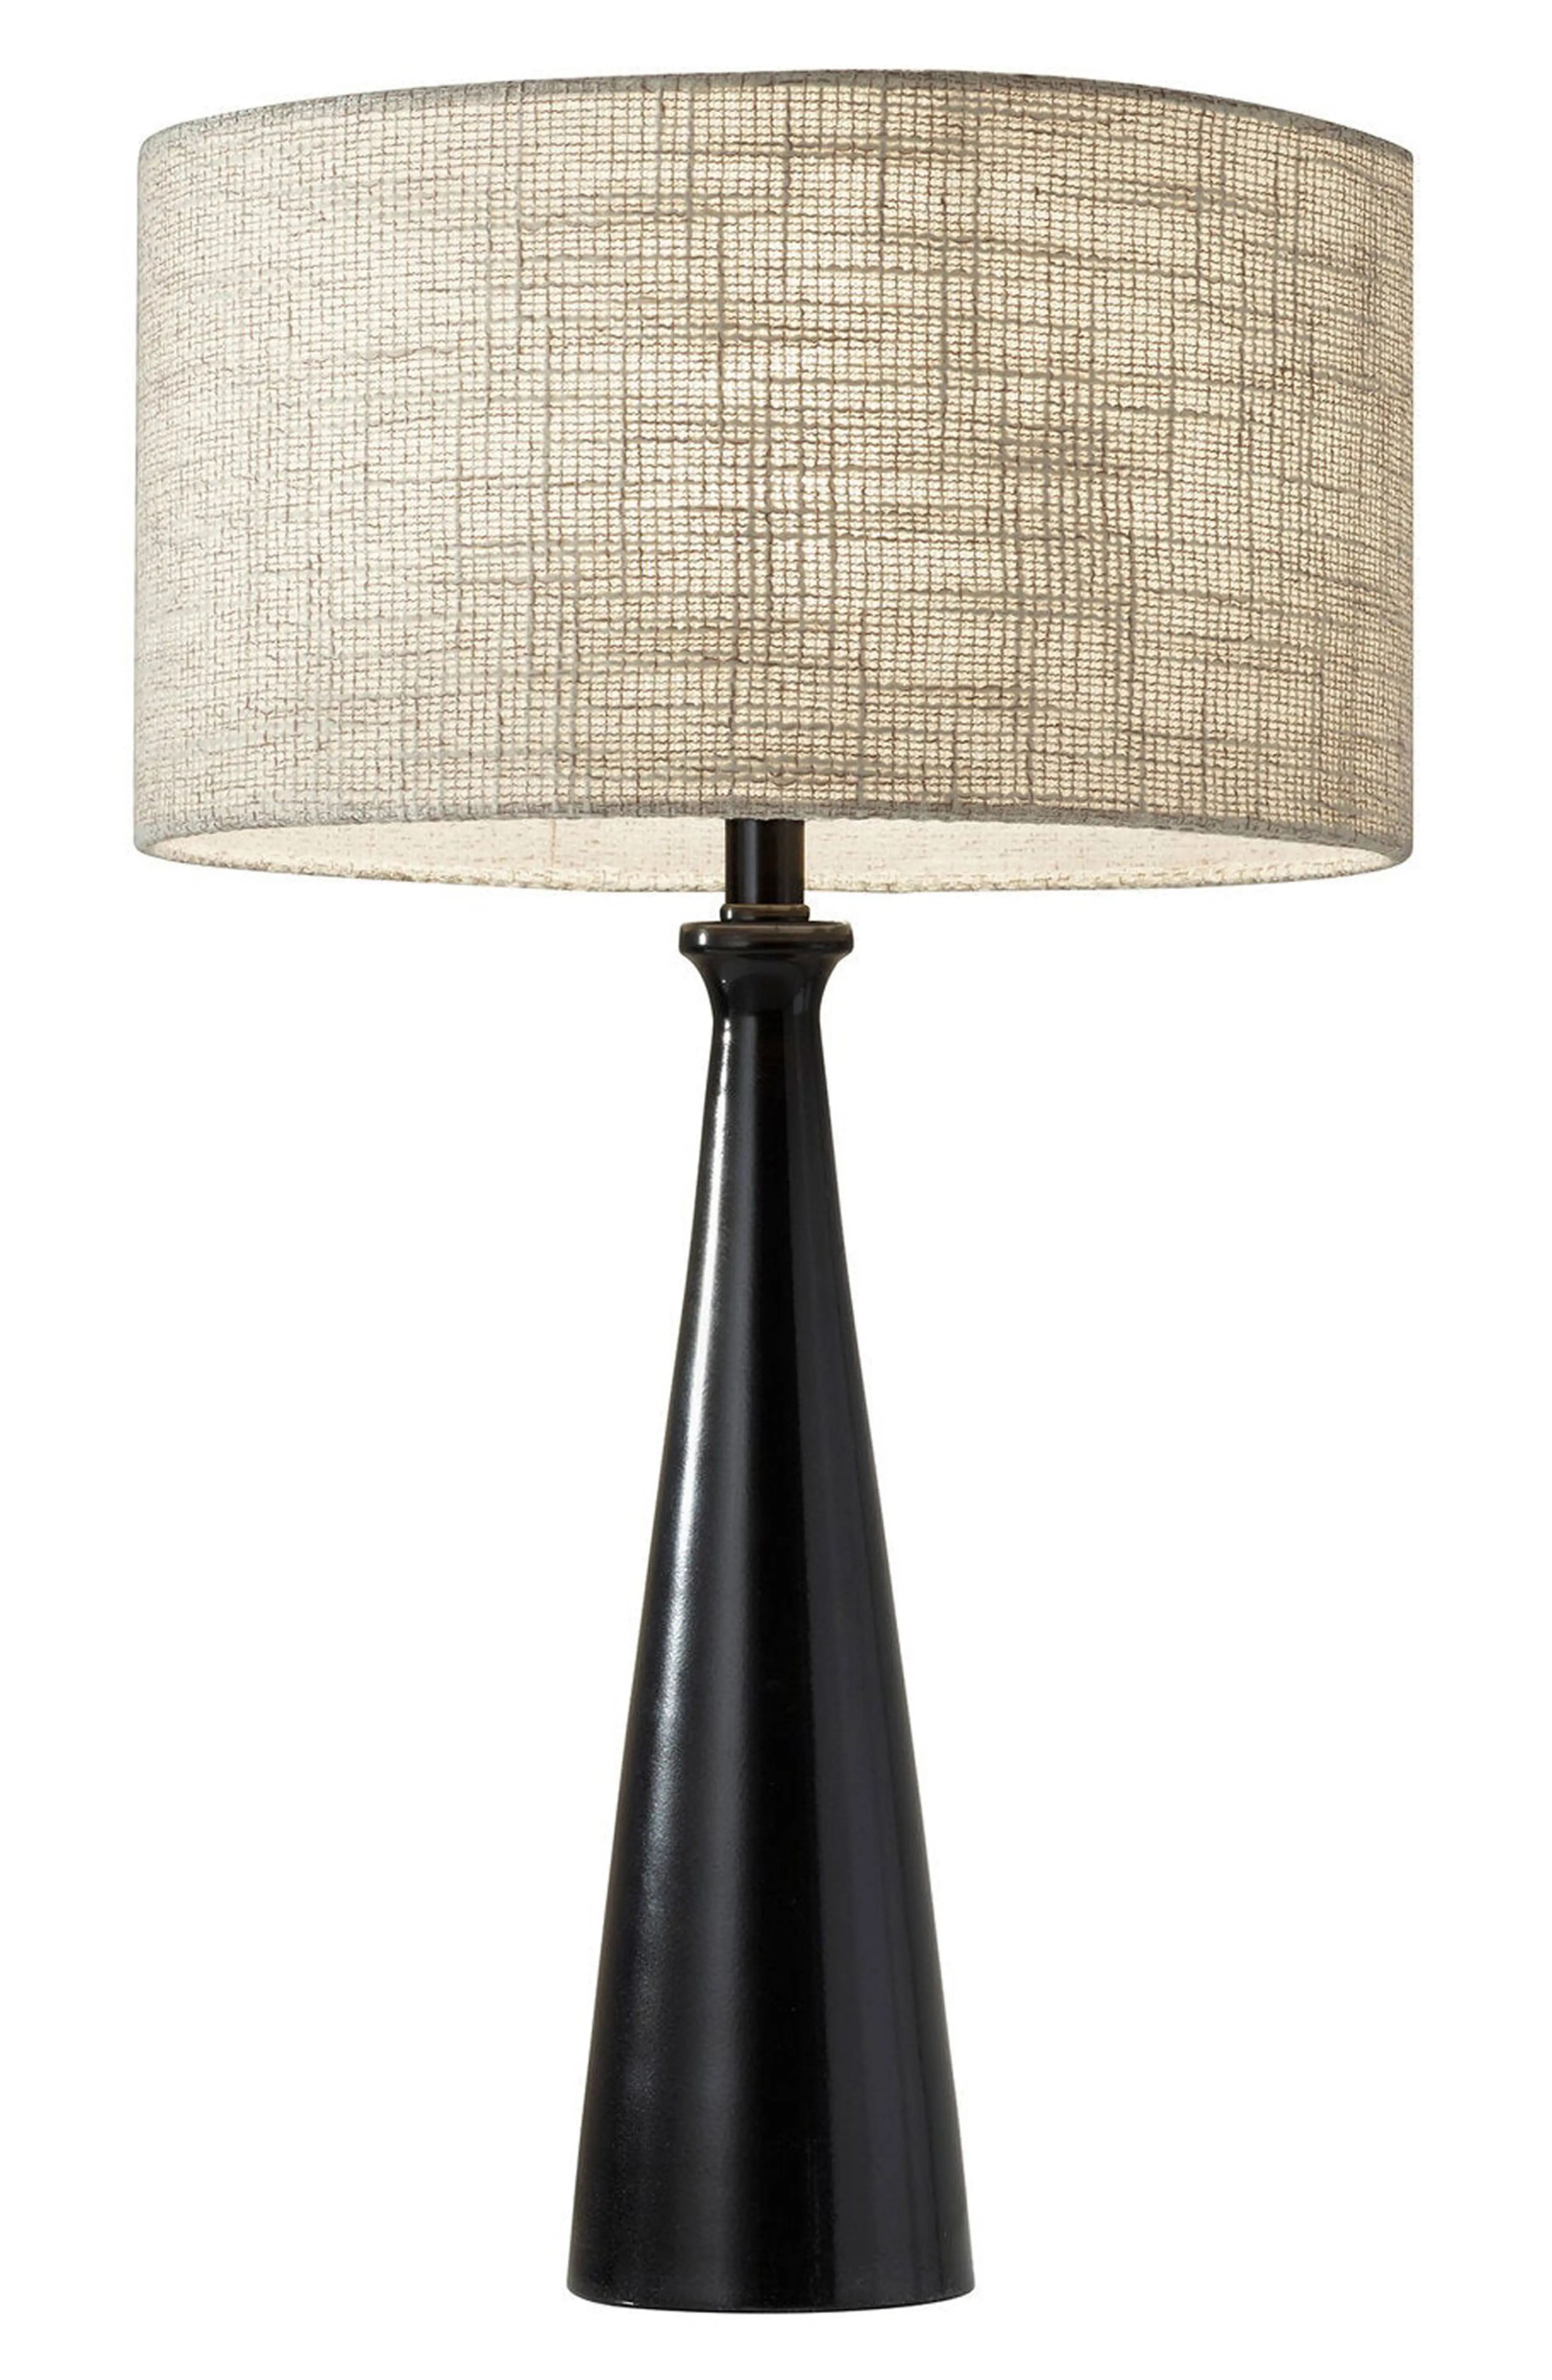 Linda Table Lamp | Nordstrom